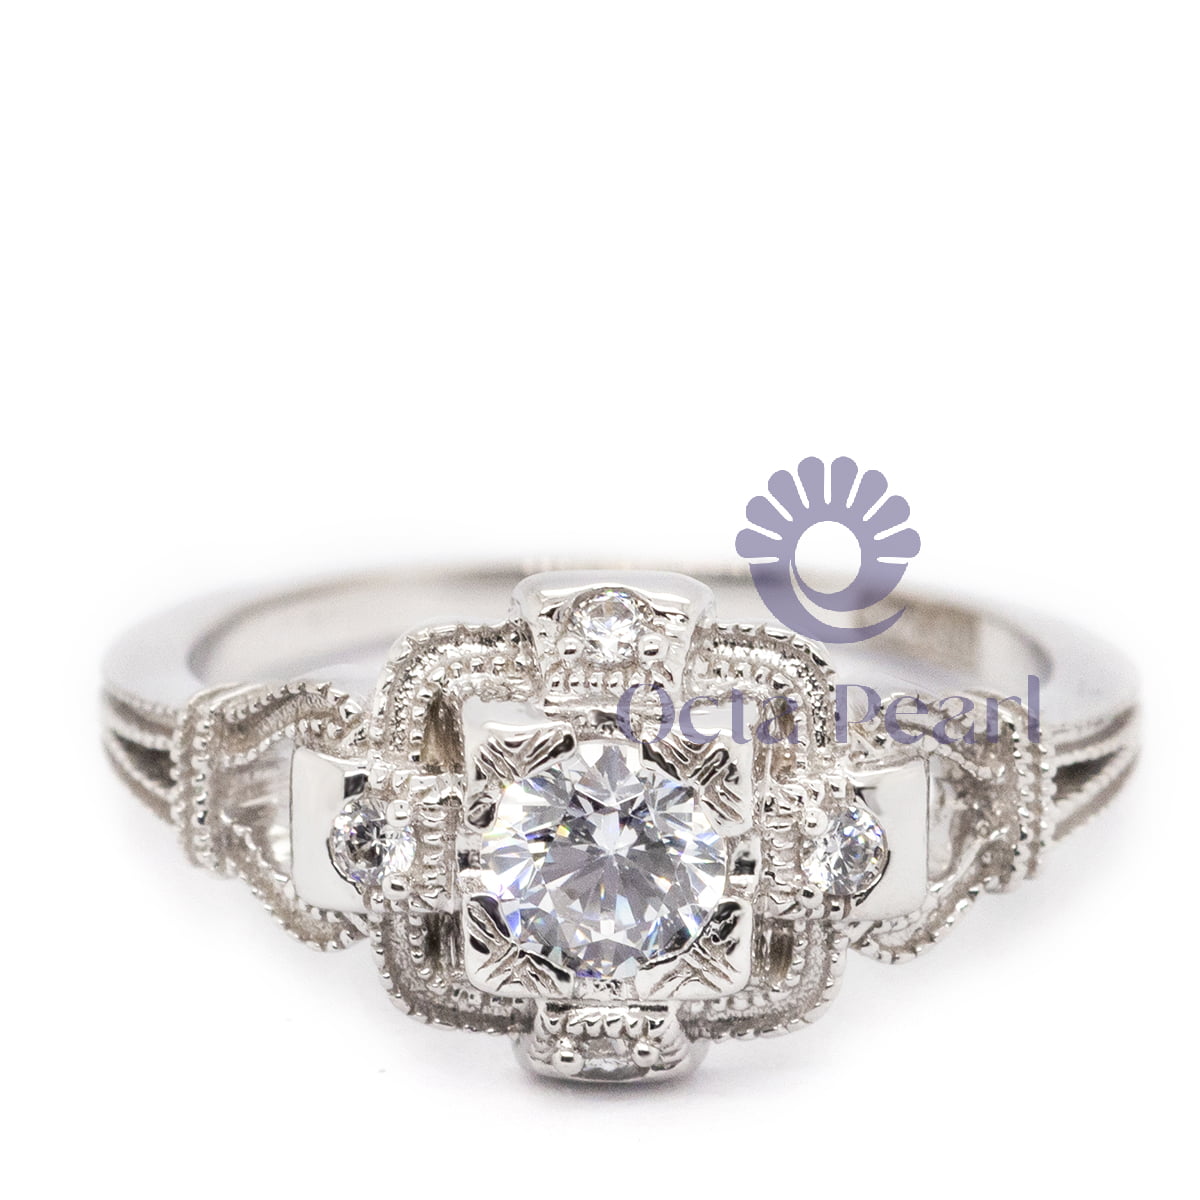 Silver Edwardian Wedding Ring With Milgrain